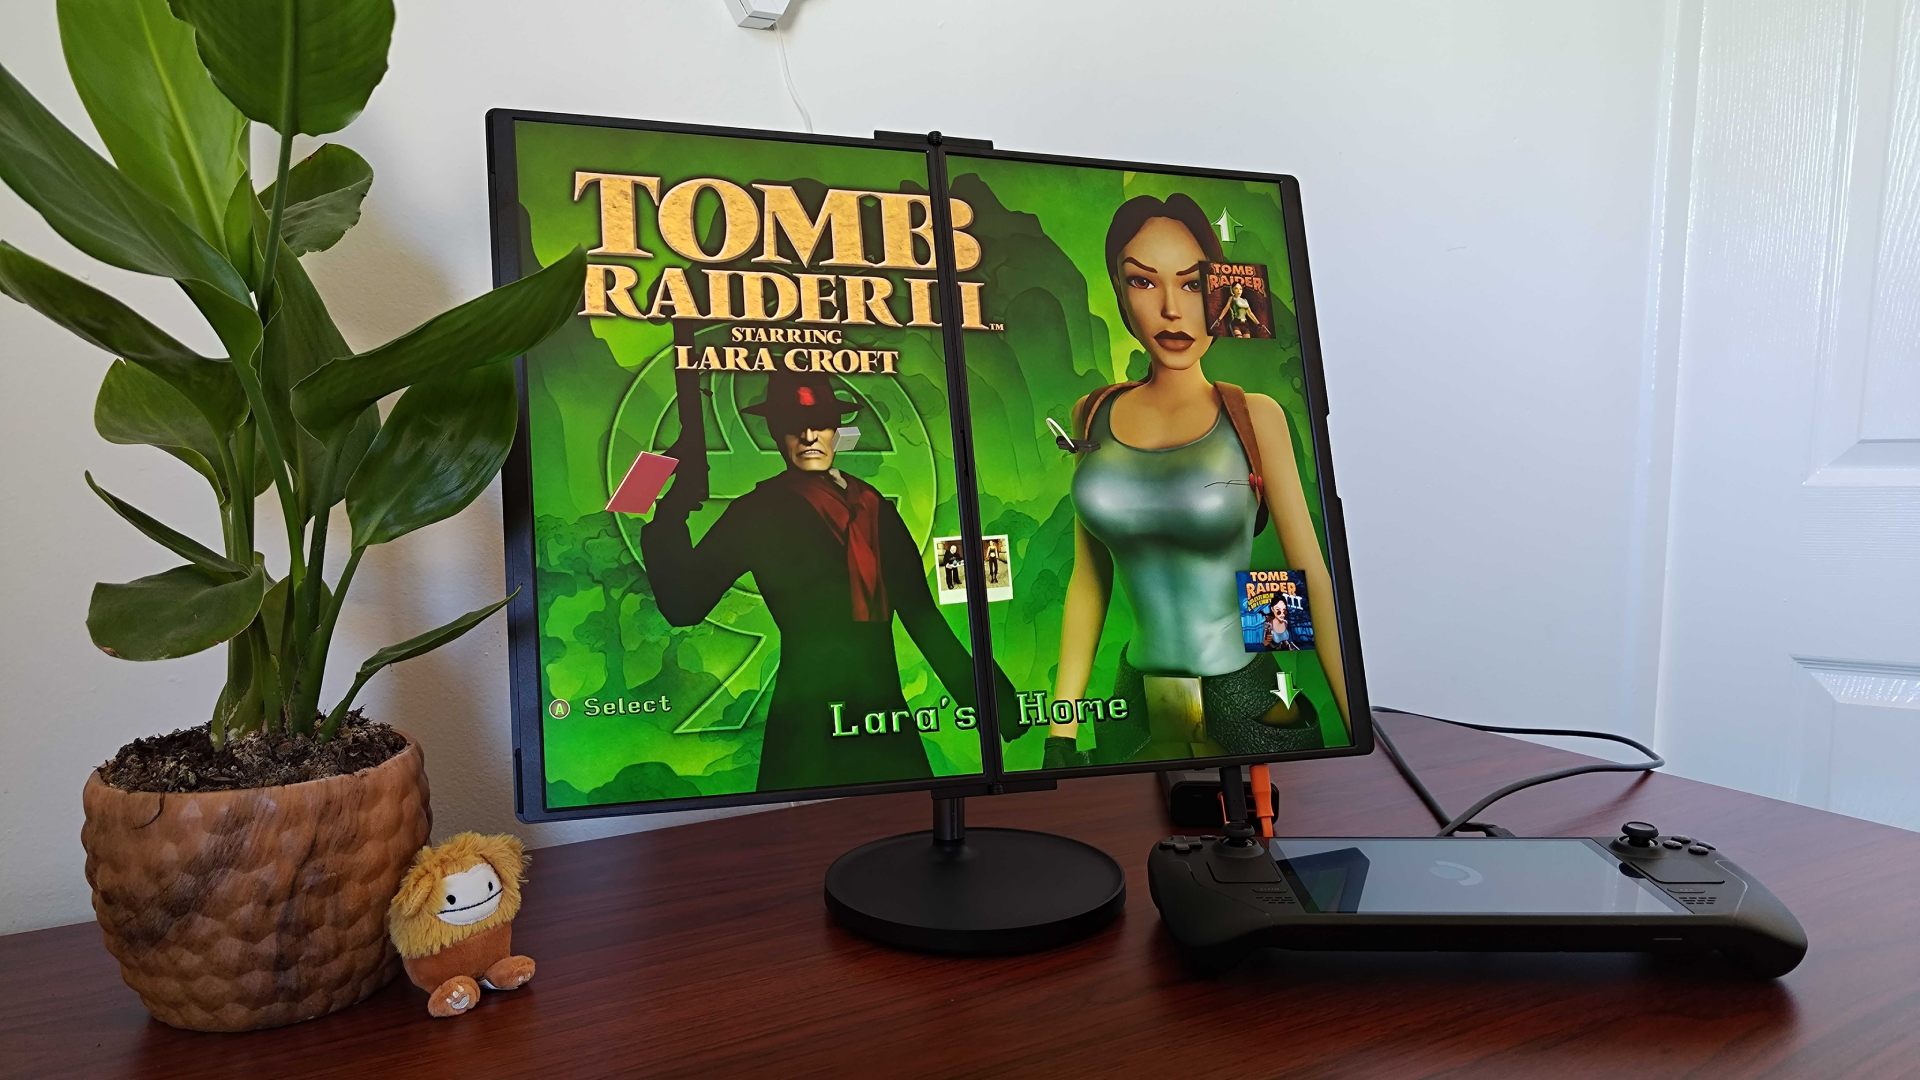 Jsaux FlipGo with Tomb Raider 2 menu spread across both screens